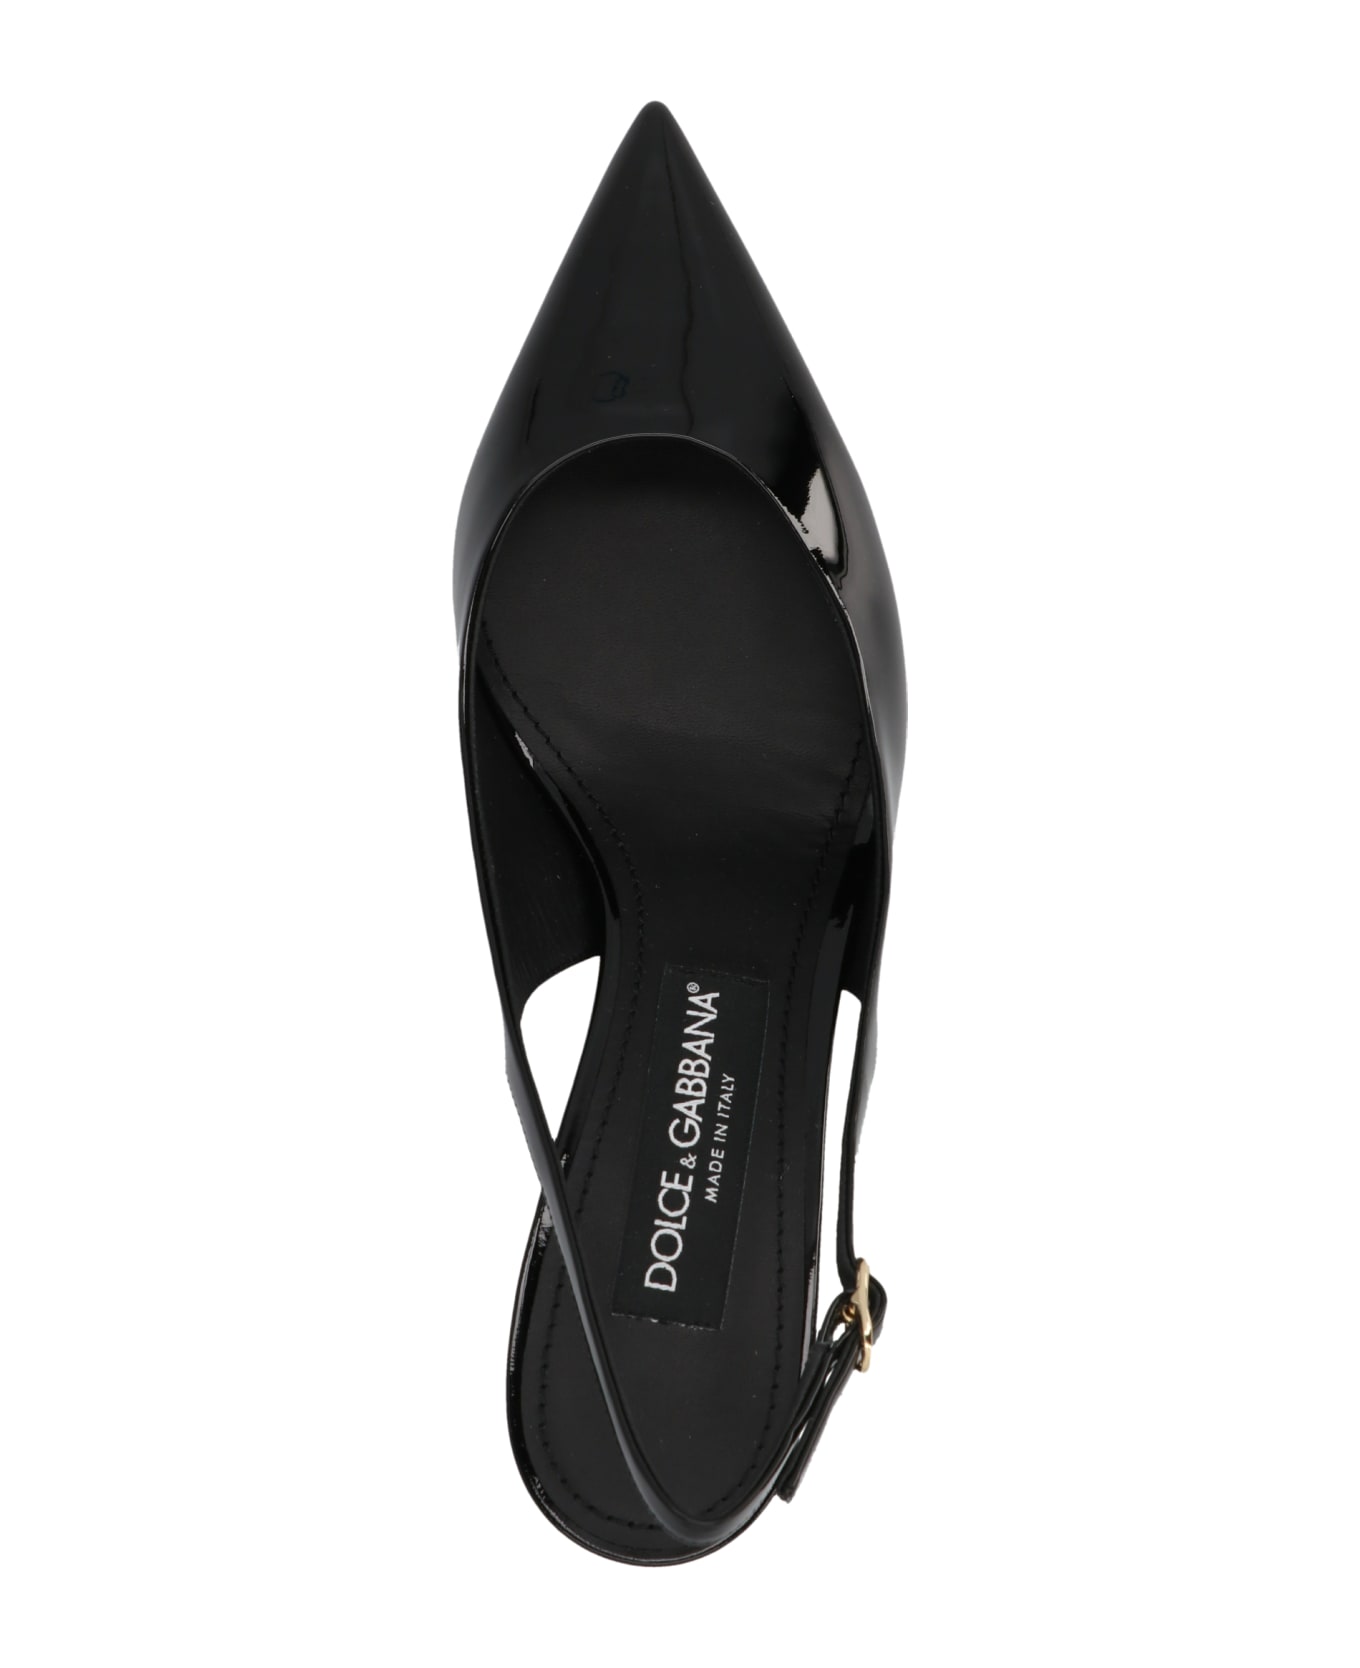 Dolce & Gabbana Slingback Shoes - Black